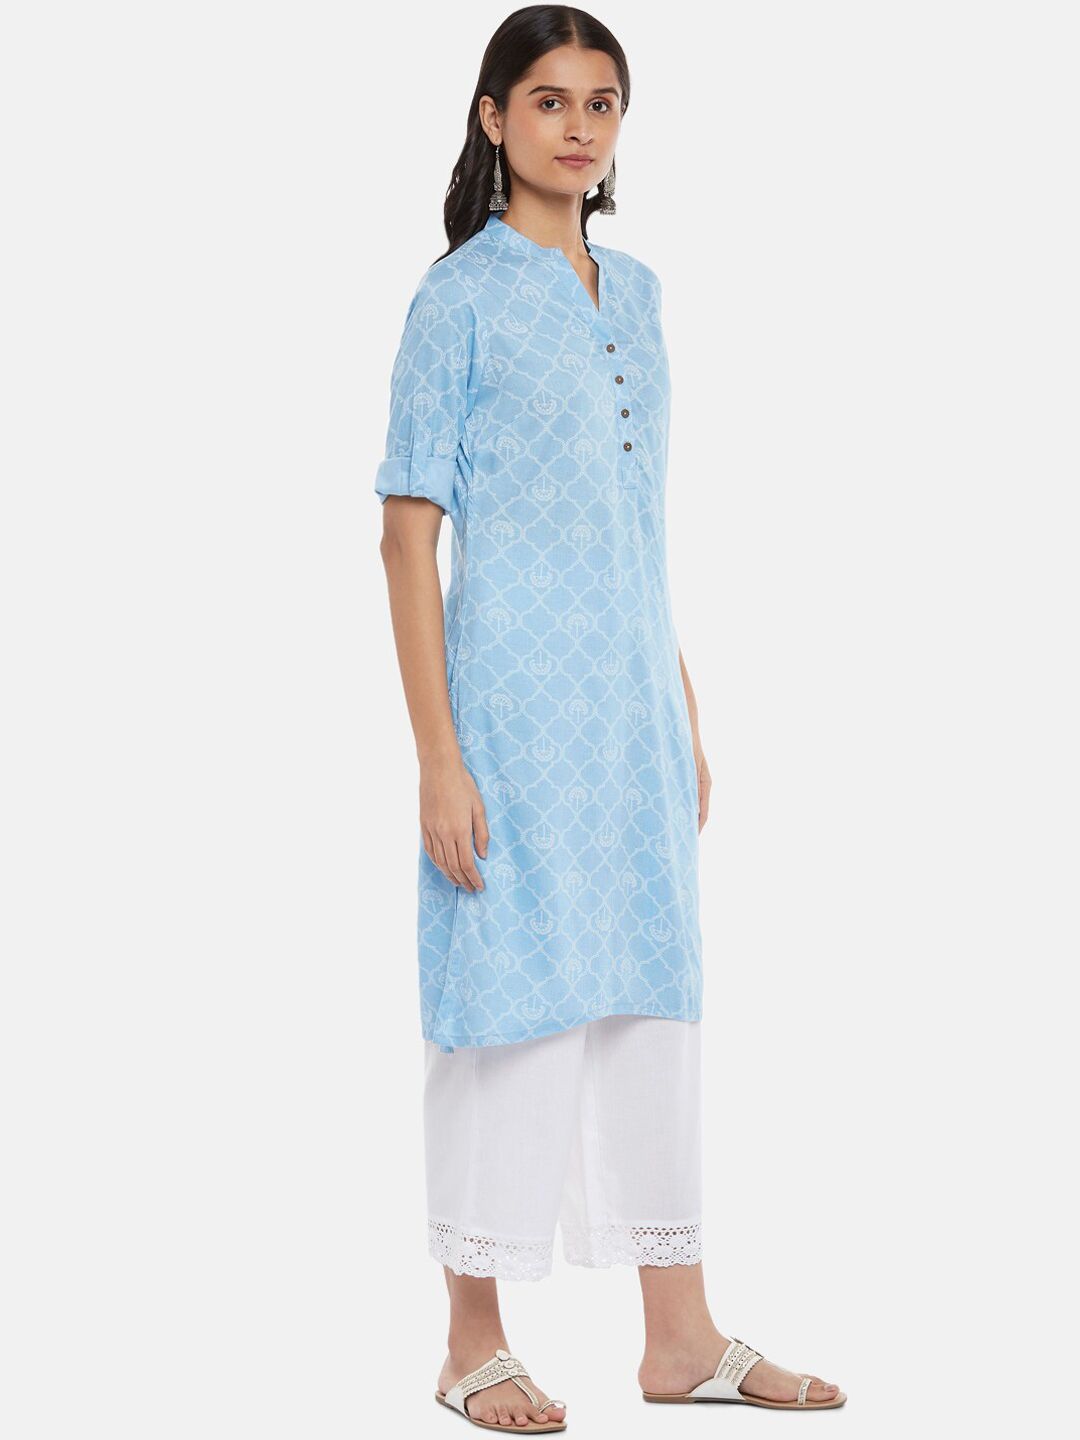 RANGMANCH BY PANTALOONS Women Blue Thread Work Kurta Price in India